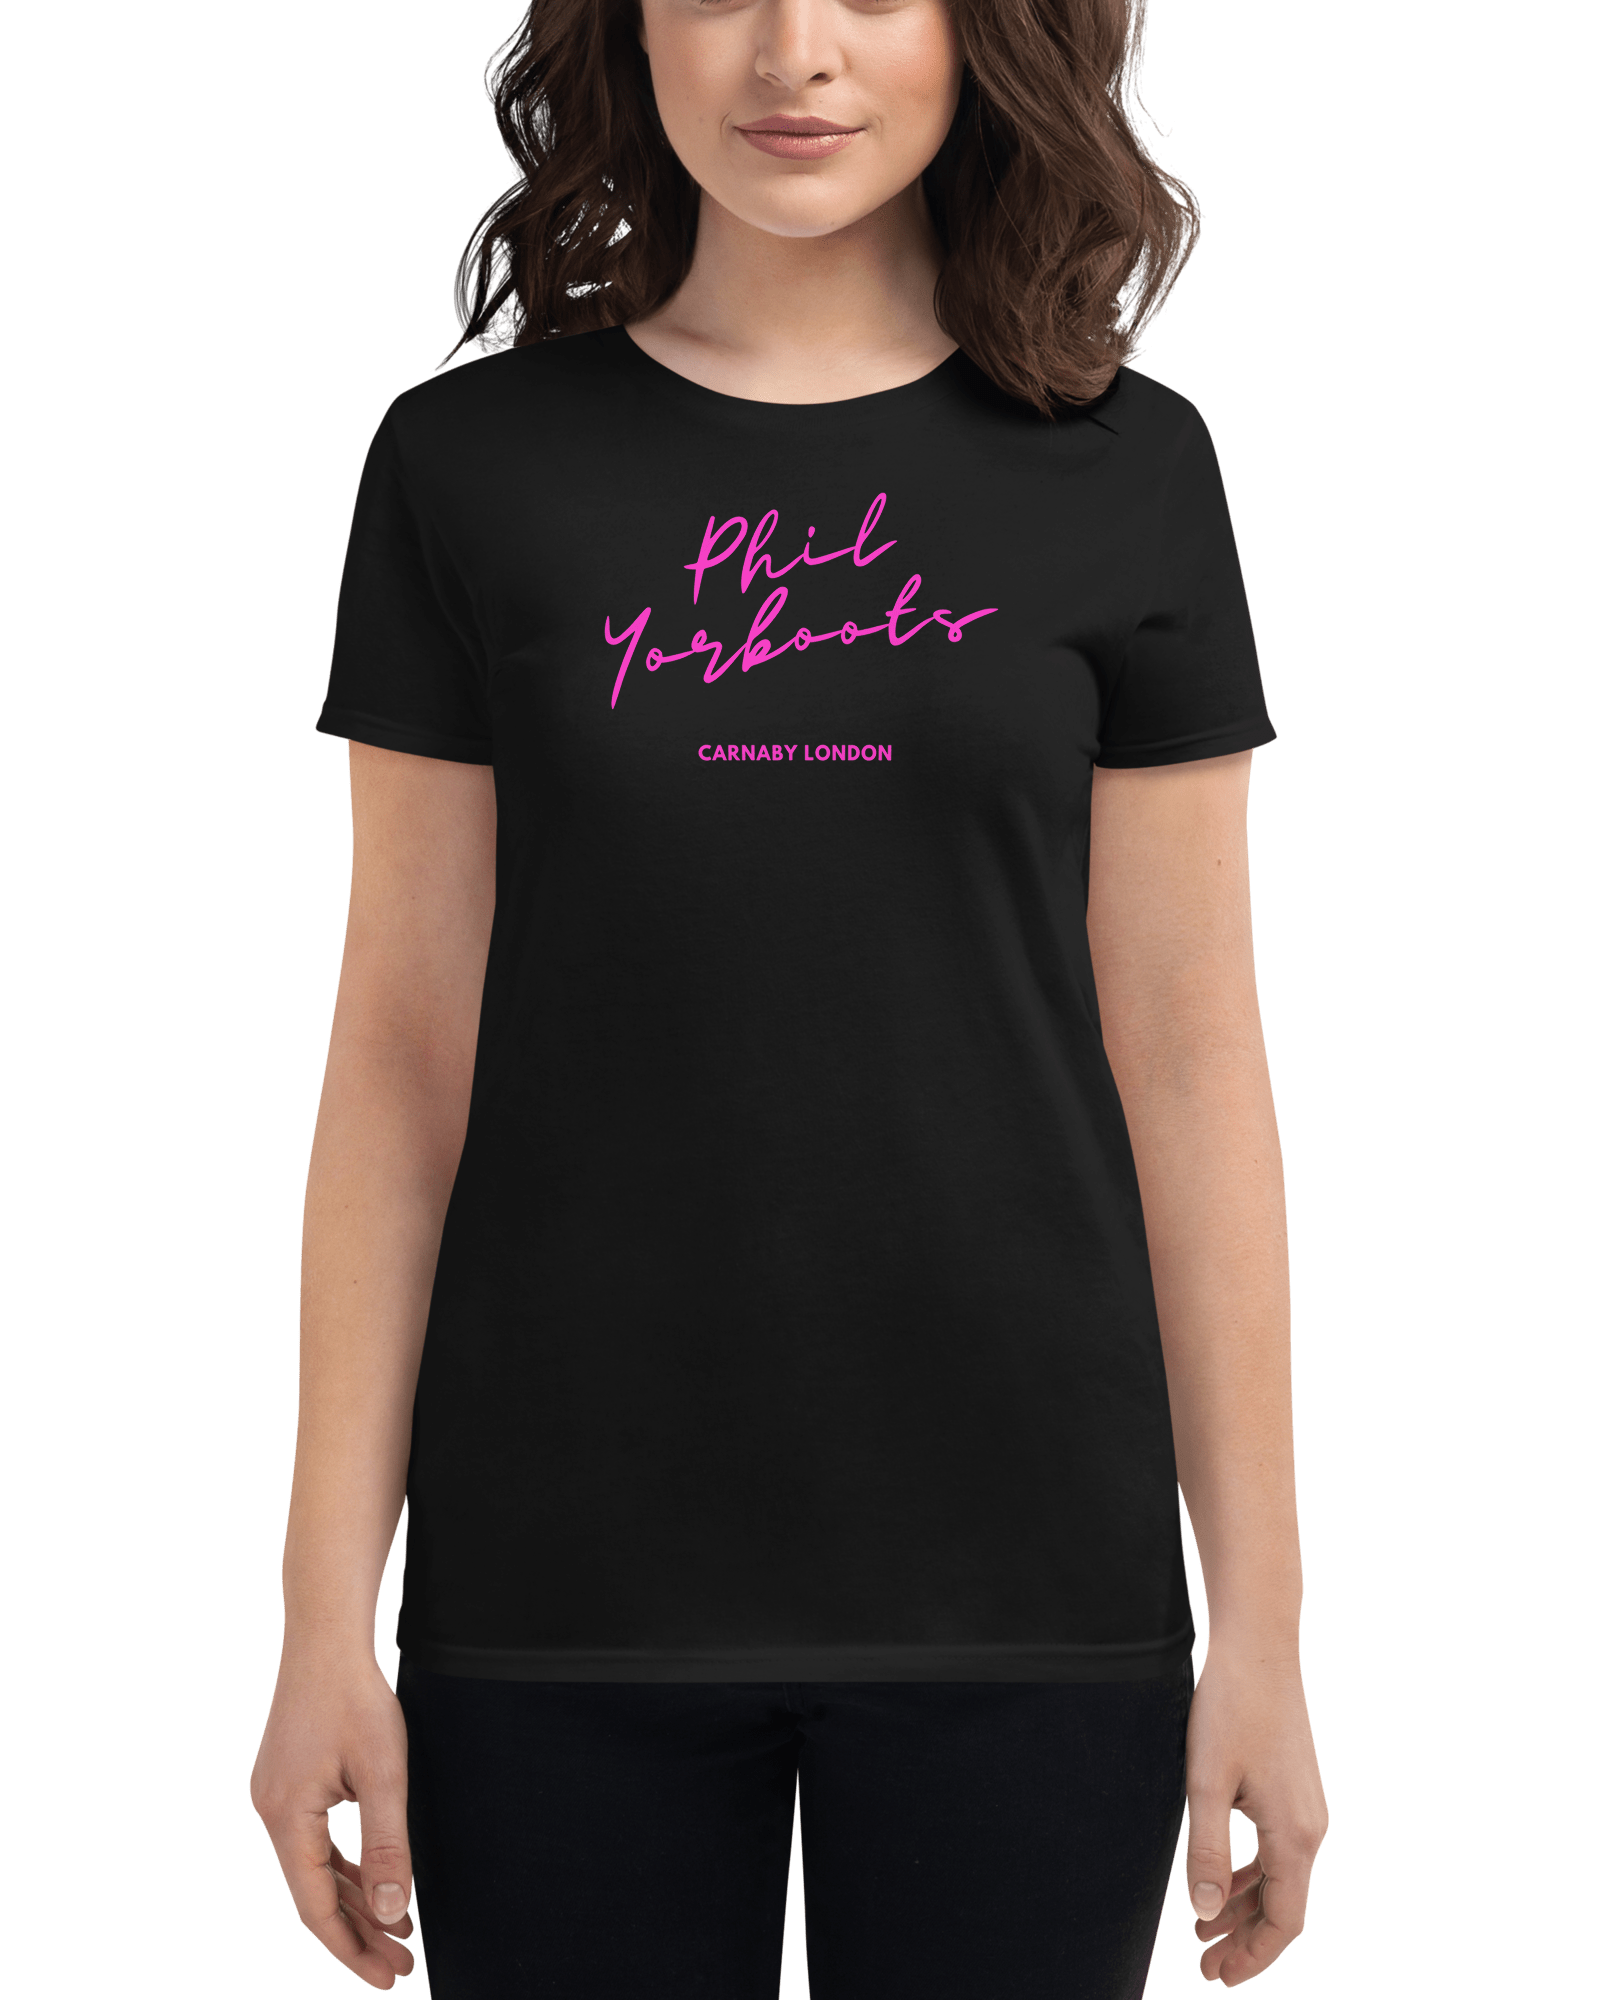 Phil Yorboots Women's T-shirt Black / S Jolly & Goode